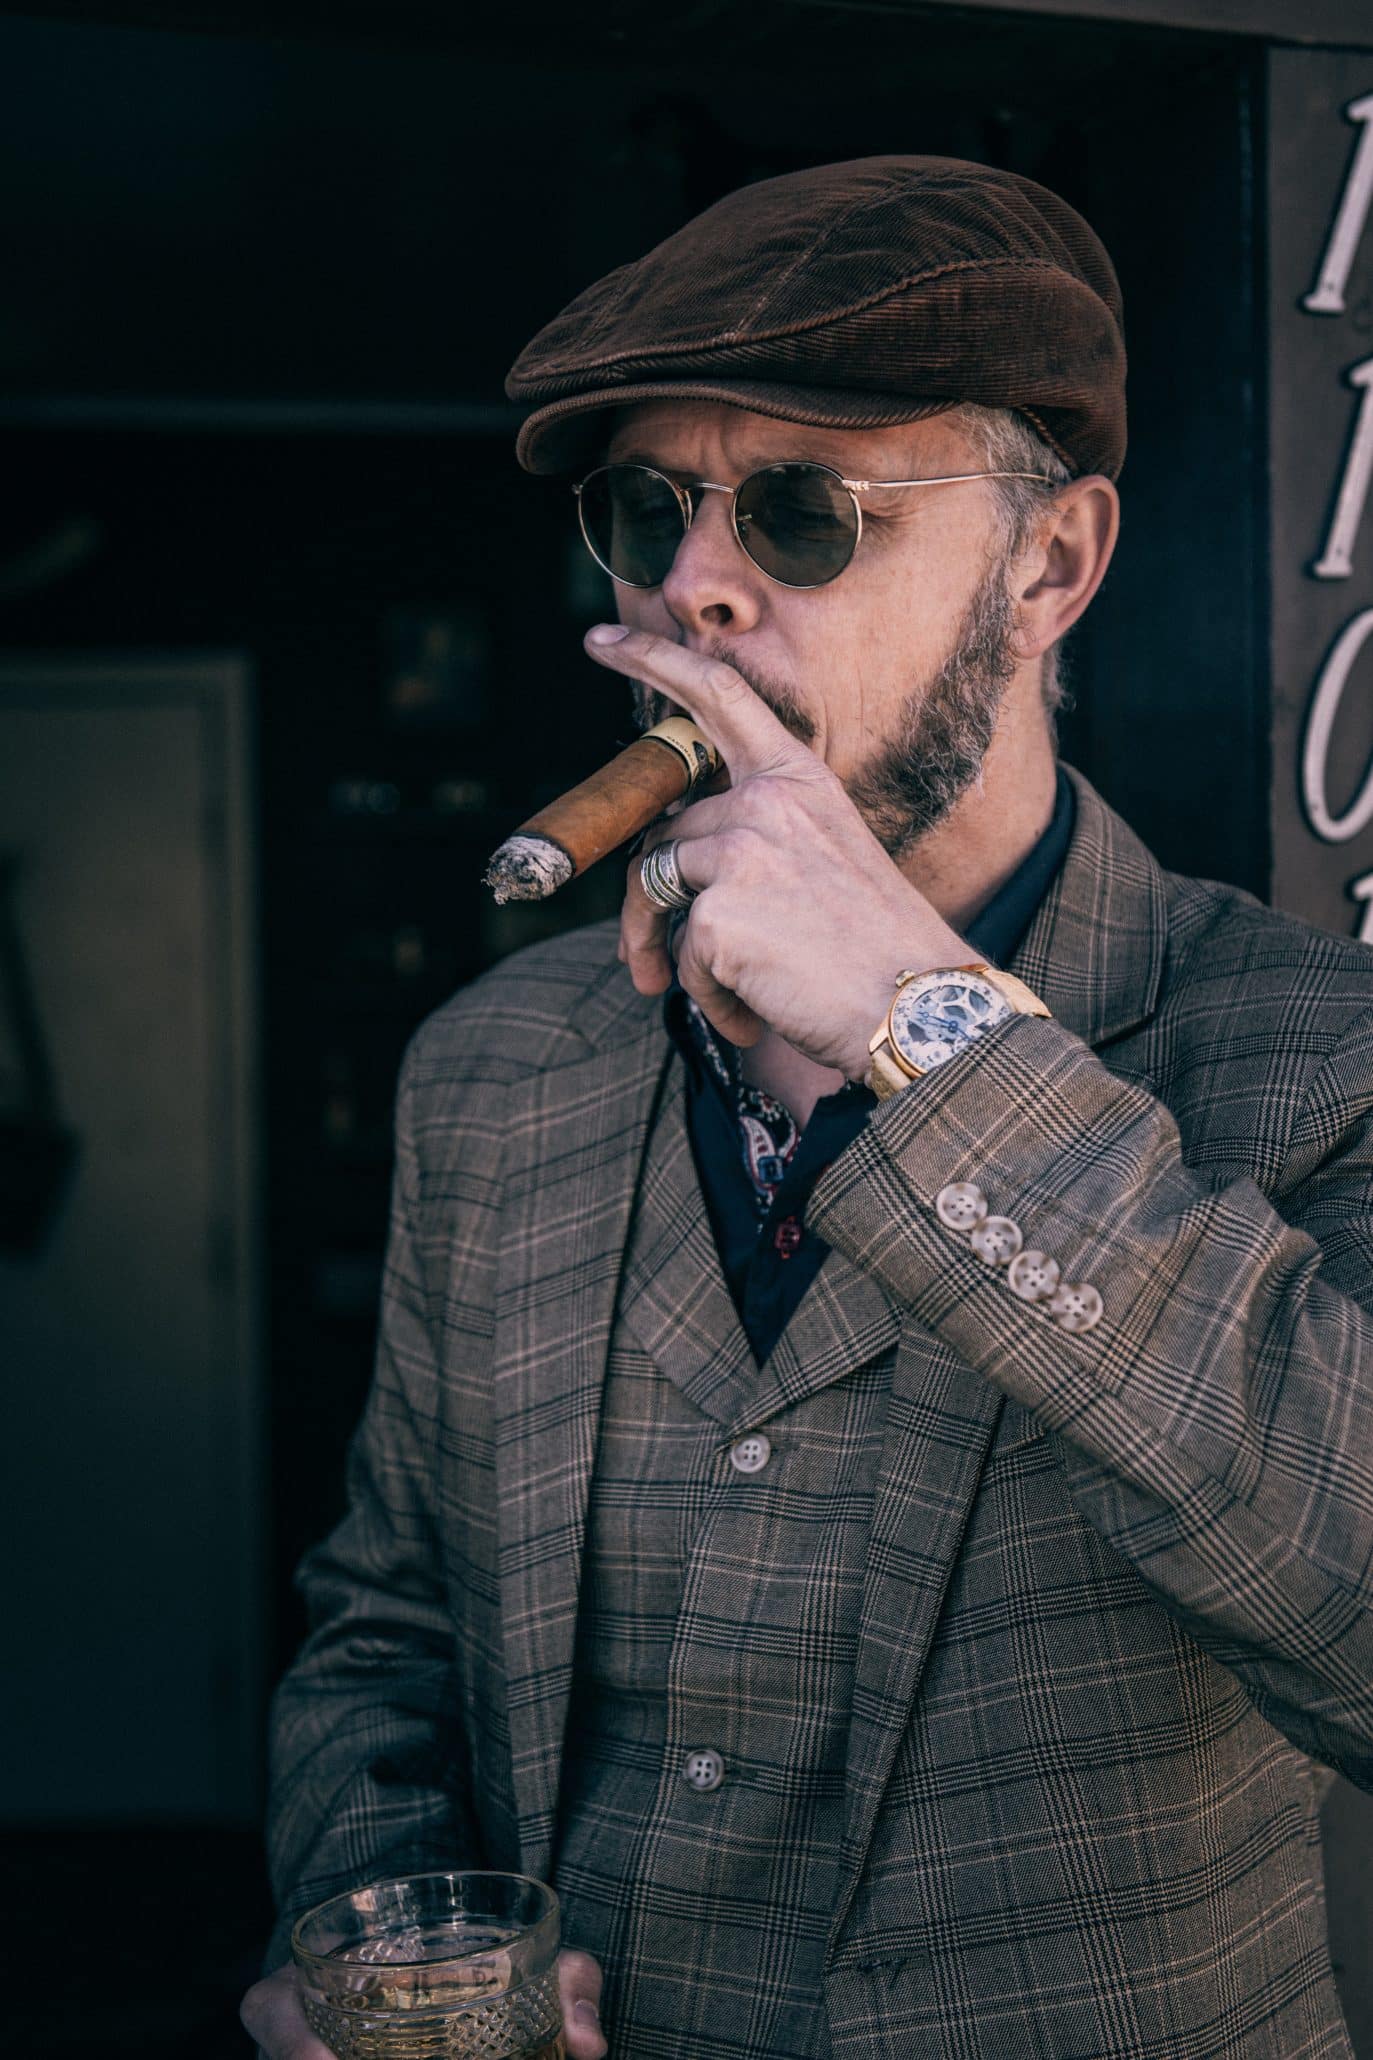 A man smoking a premium cigar